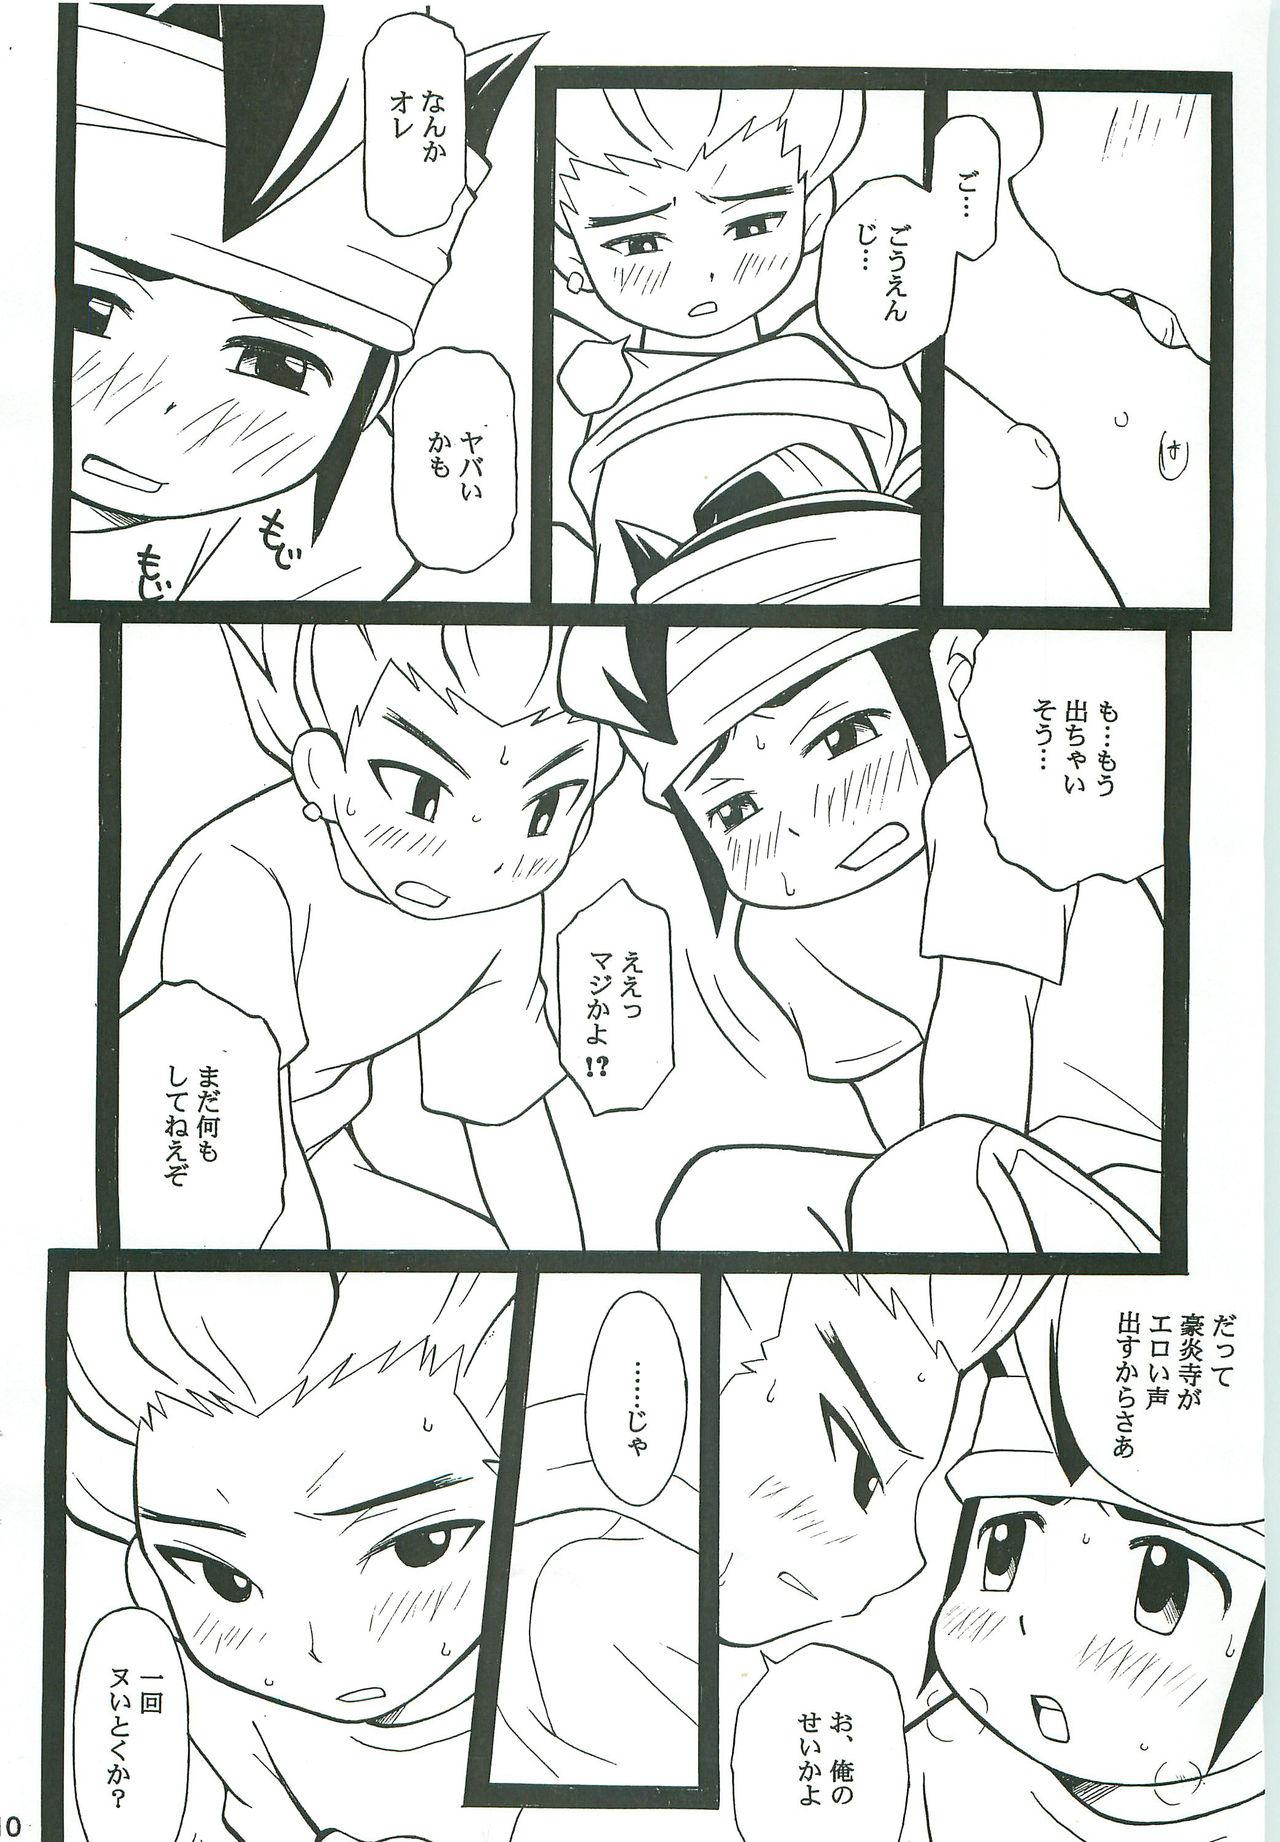 Dick GO END GO - Inazuma eleven Furry - Page 9